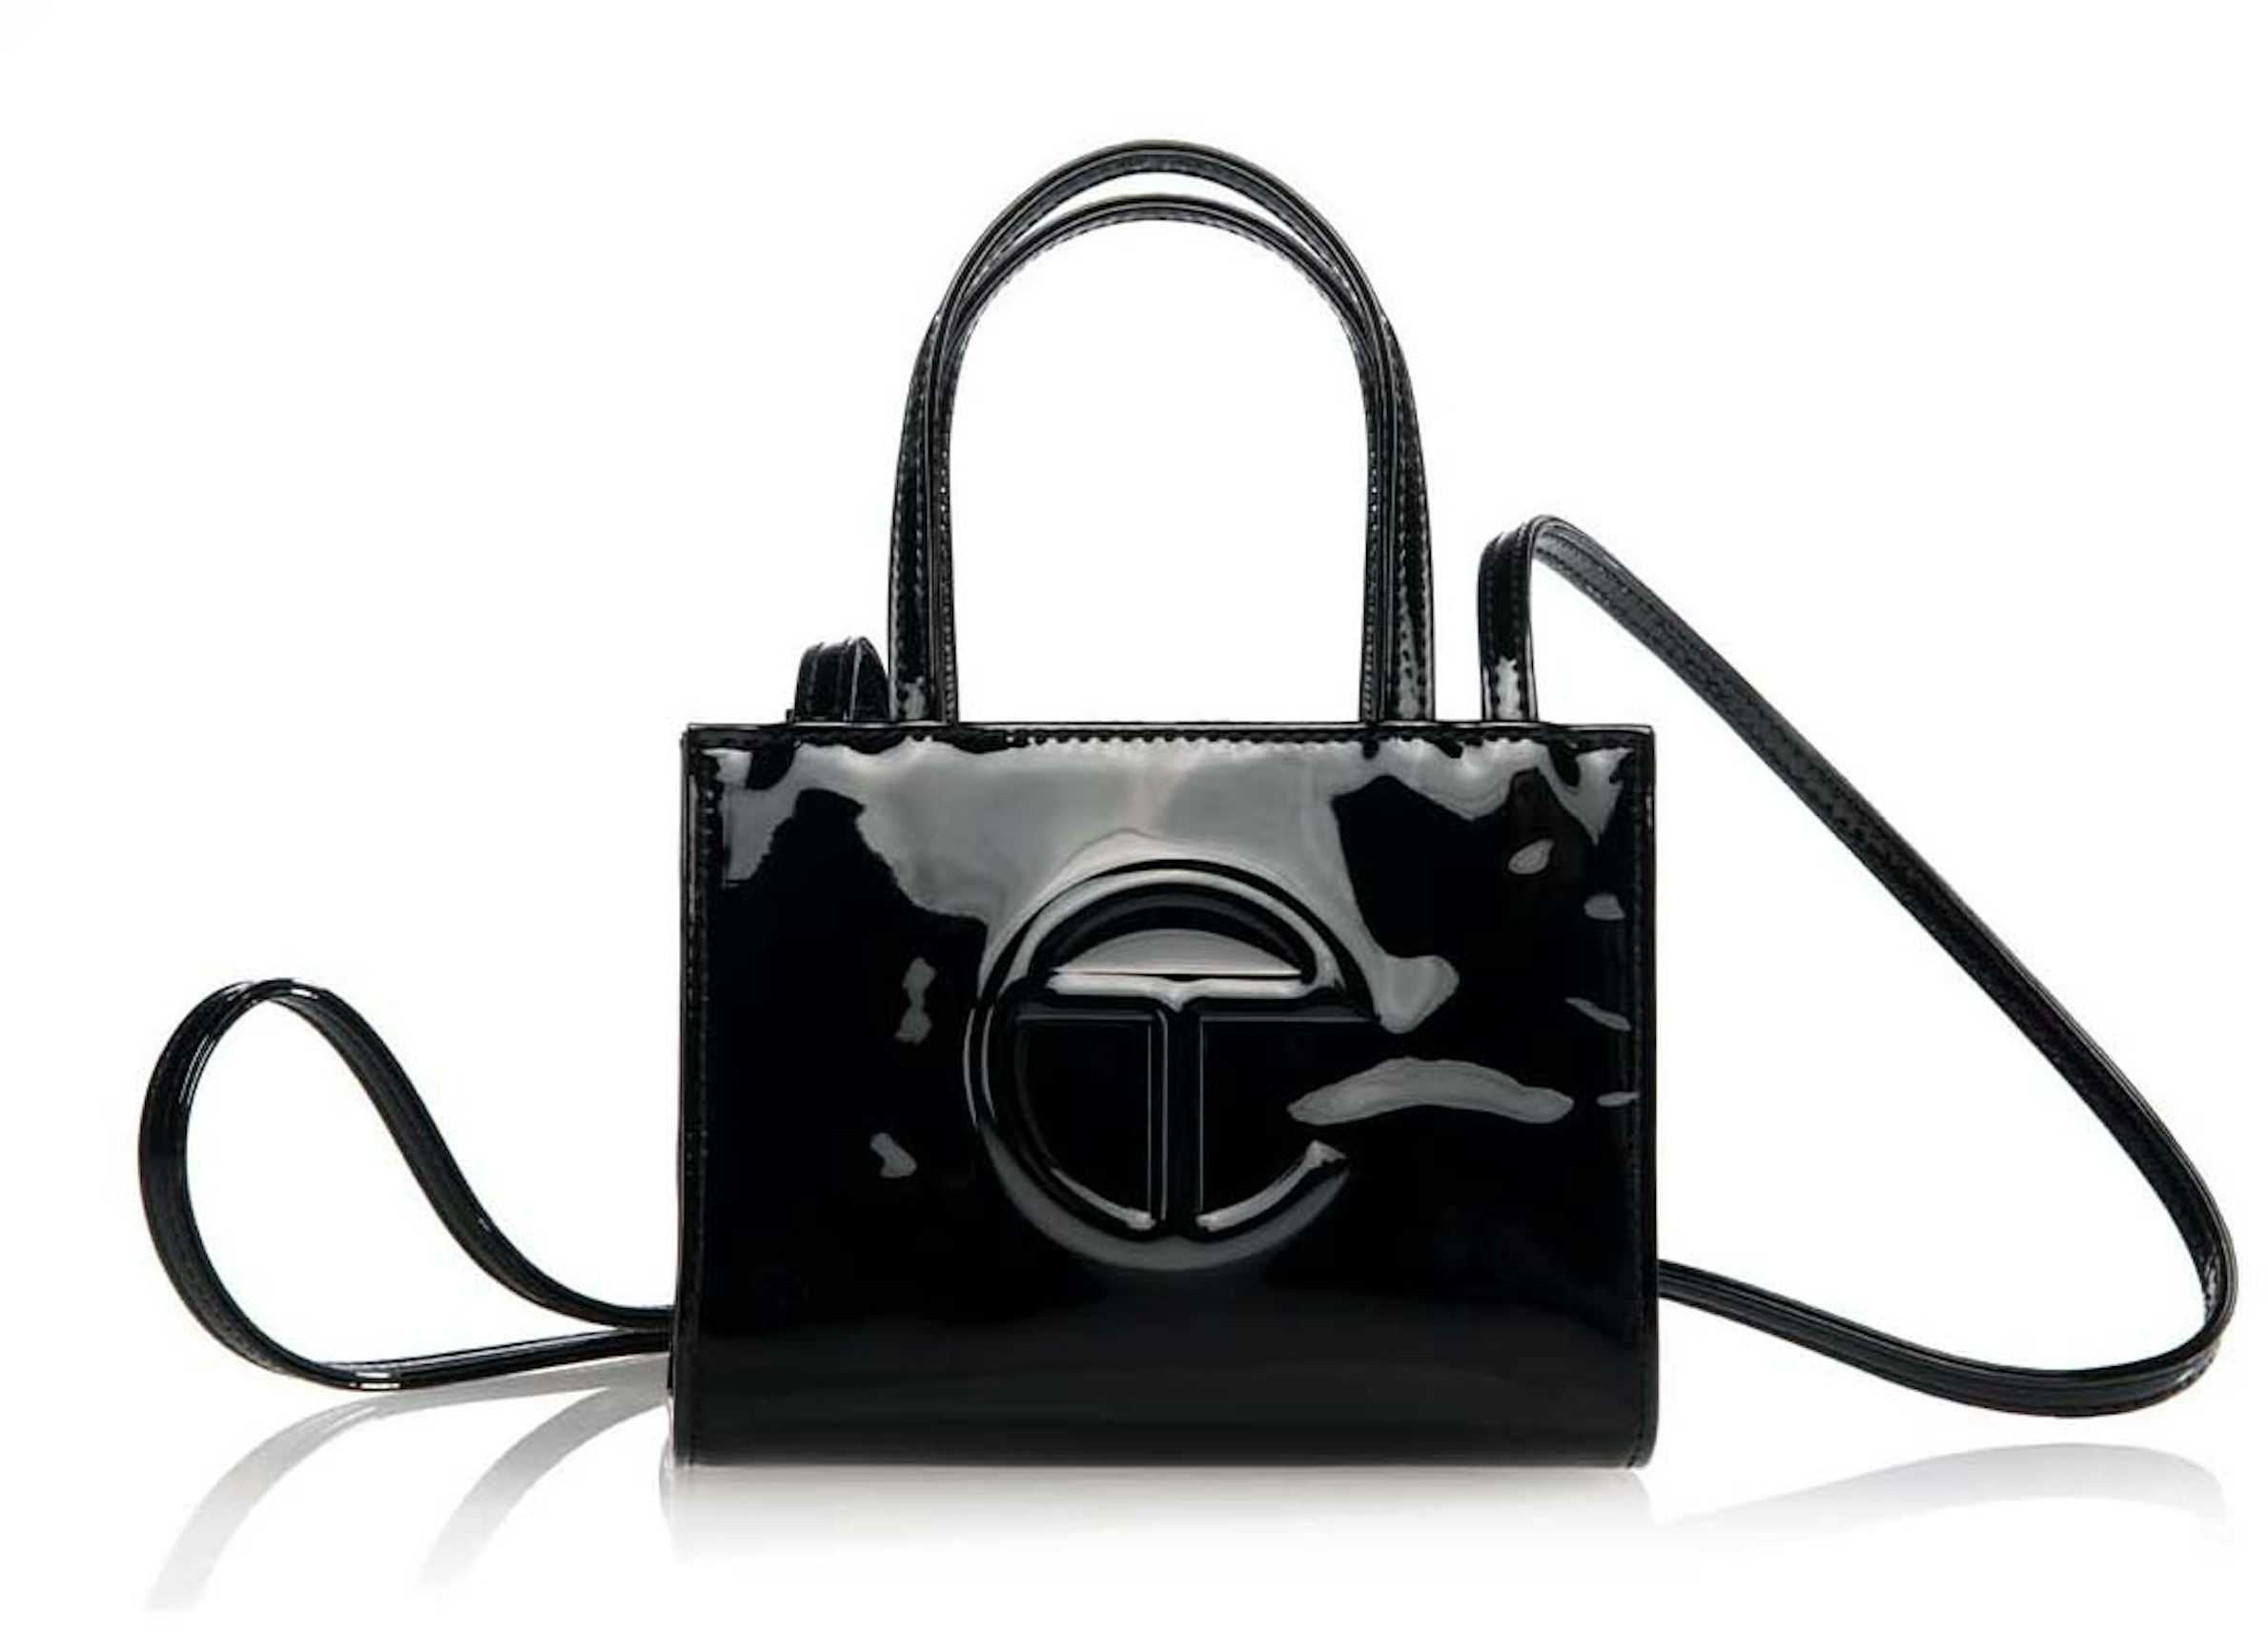 BNWT Telfar Black Patent Shopping Bag - Medium SIZE Brand New with Tags